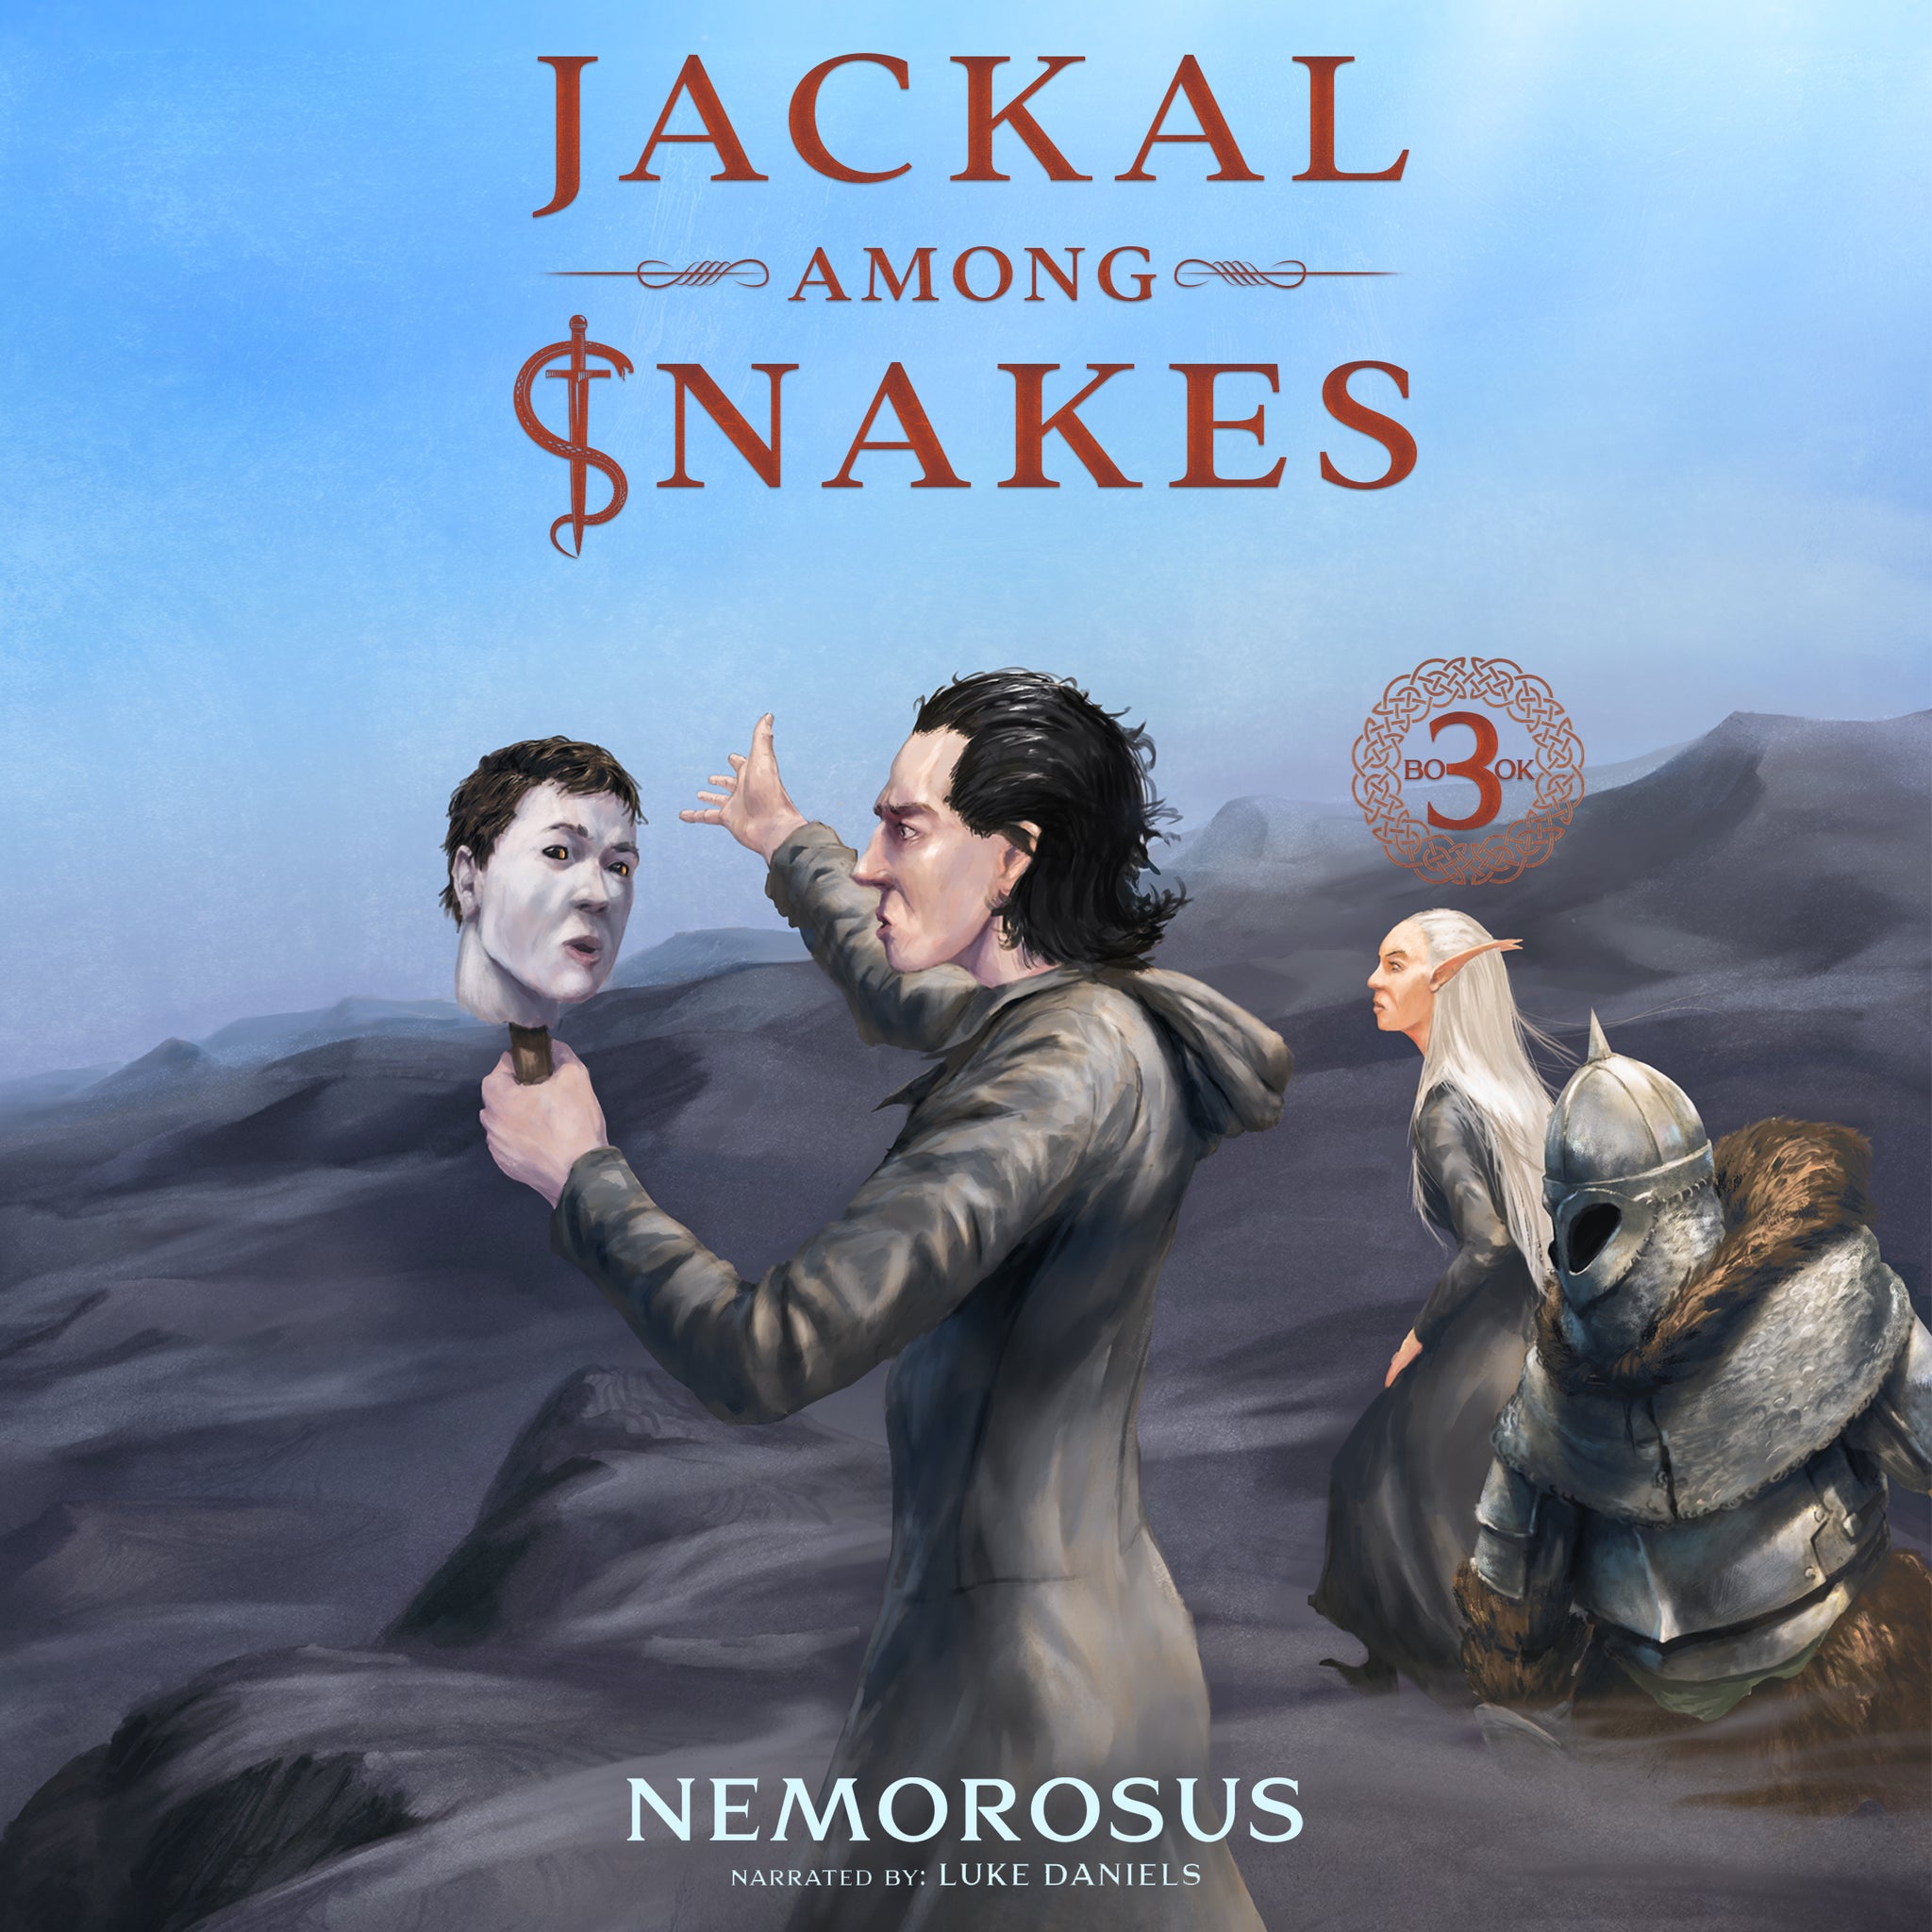 *PREORDER* Jackal Among Snakes #3 Audio